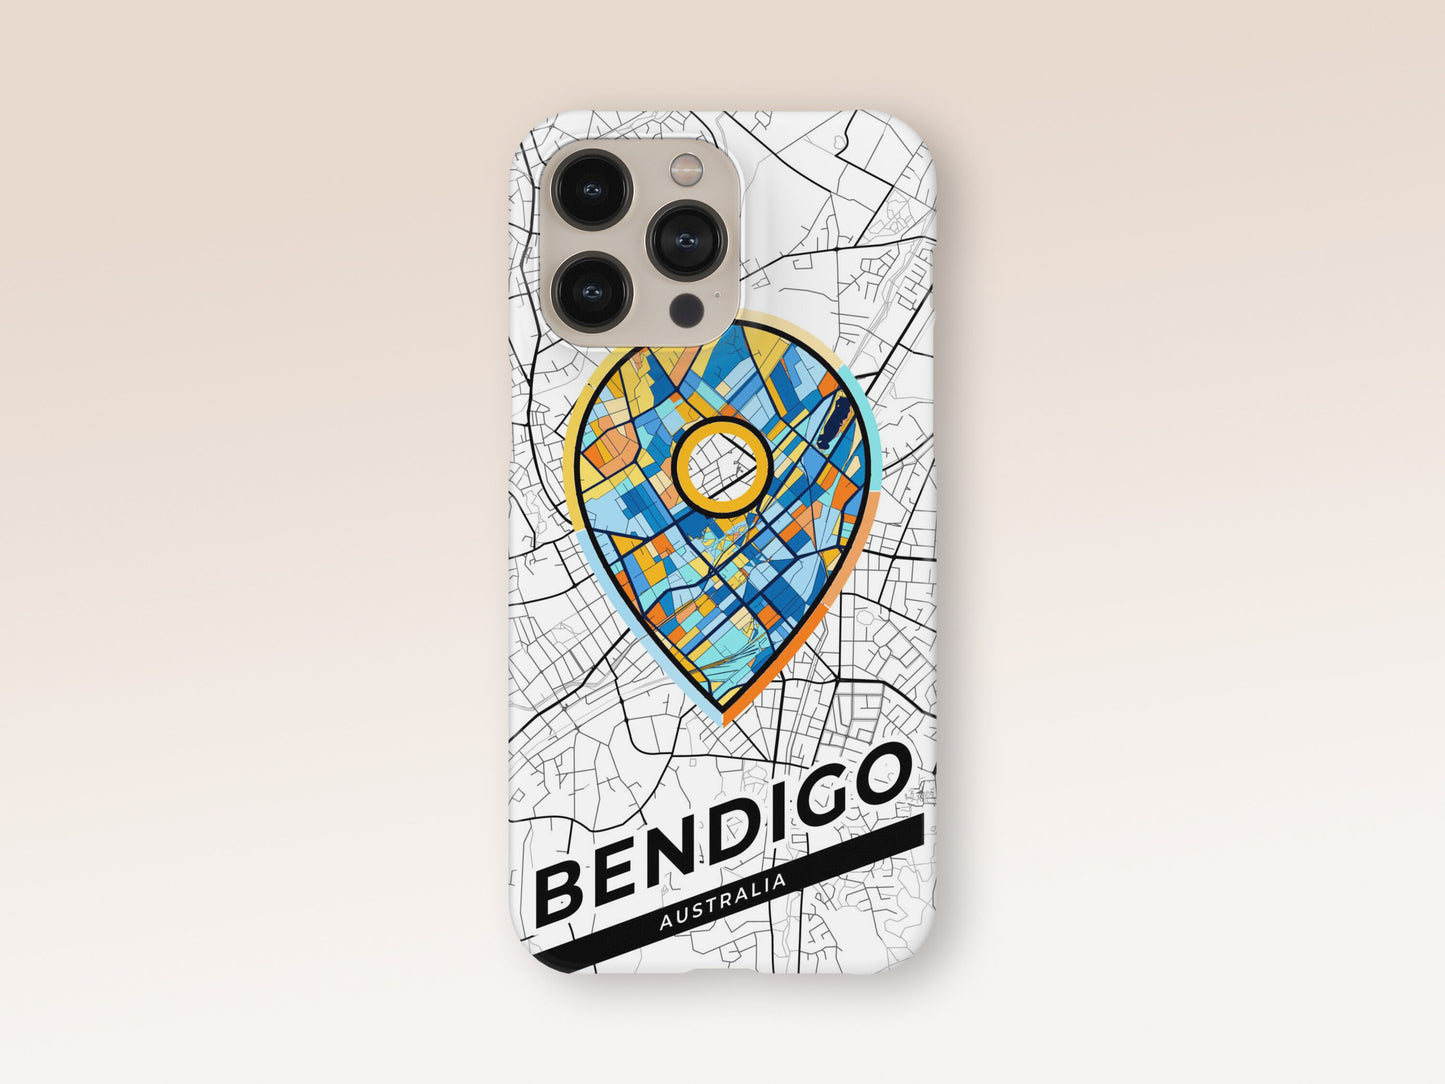 Bendigo Australia slim phone case with colorful icon. Birthday, wedding or housewarming gift. Couple match cases. 1